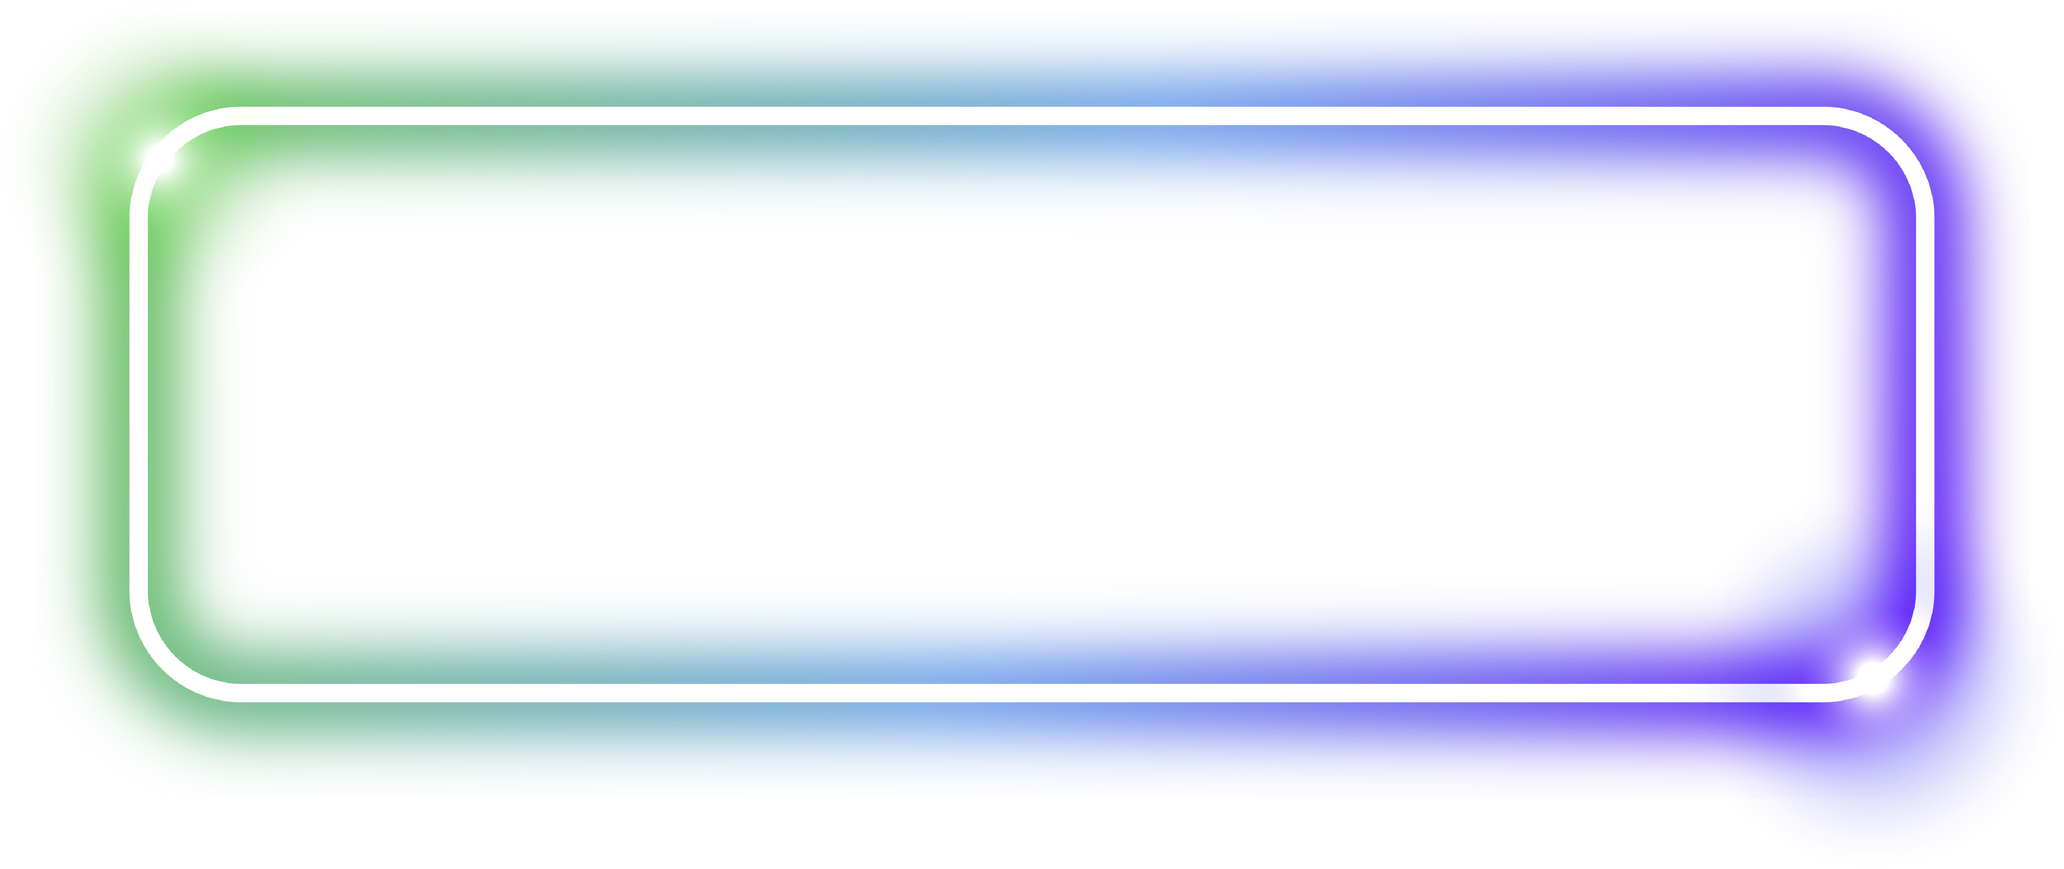 glow neon square border line light element illustration